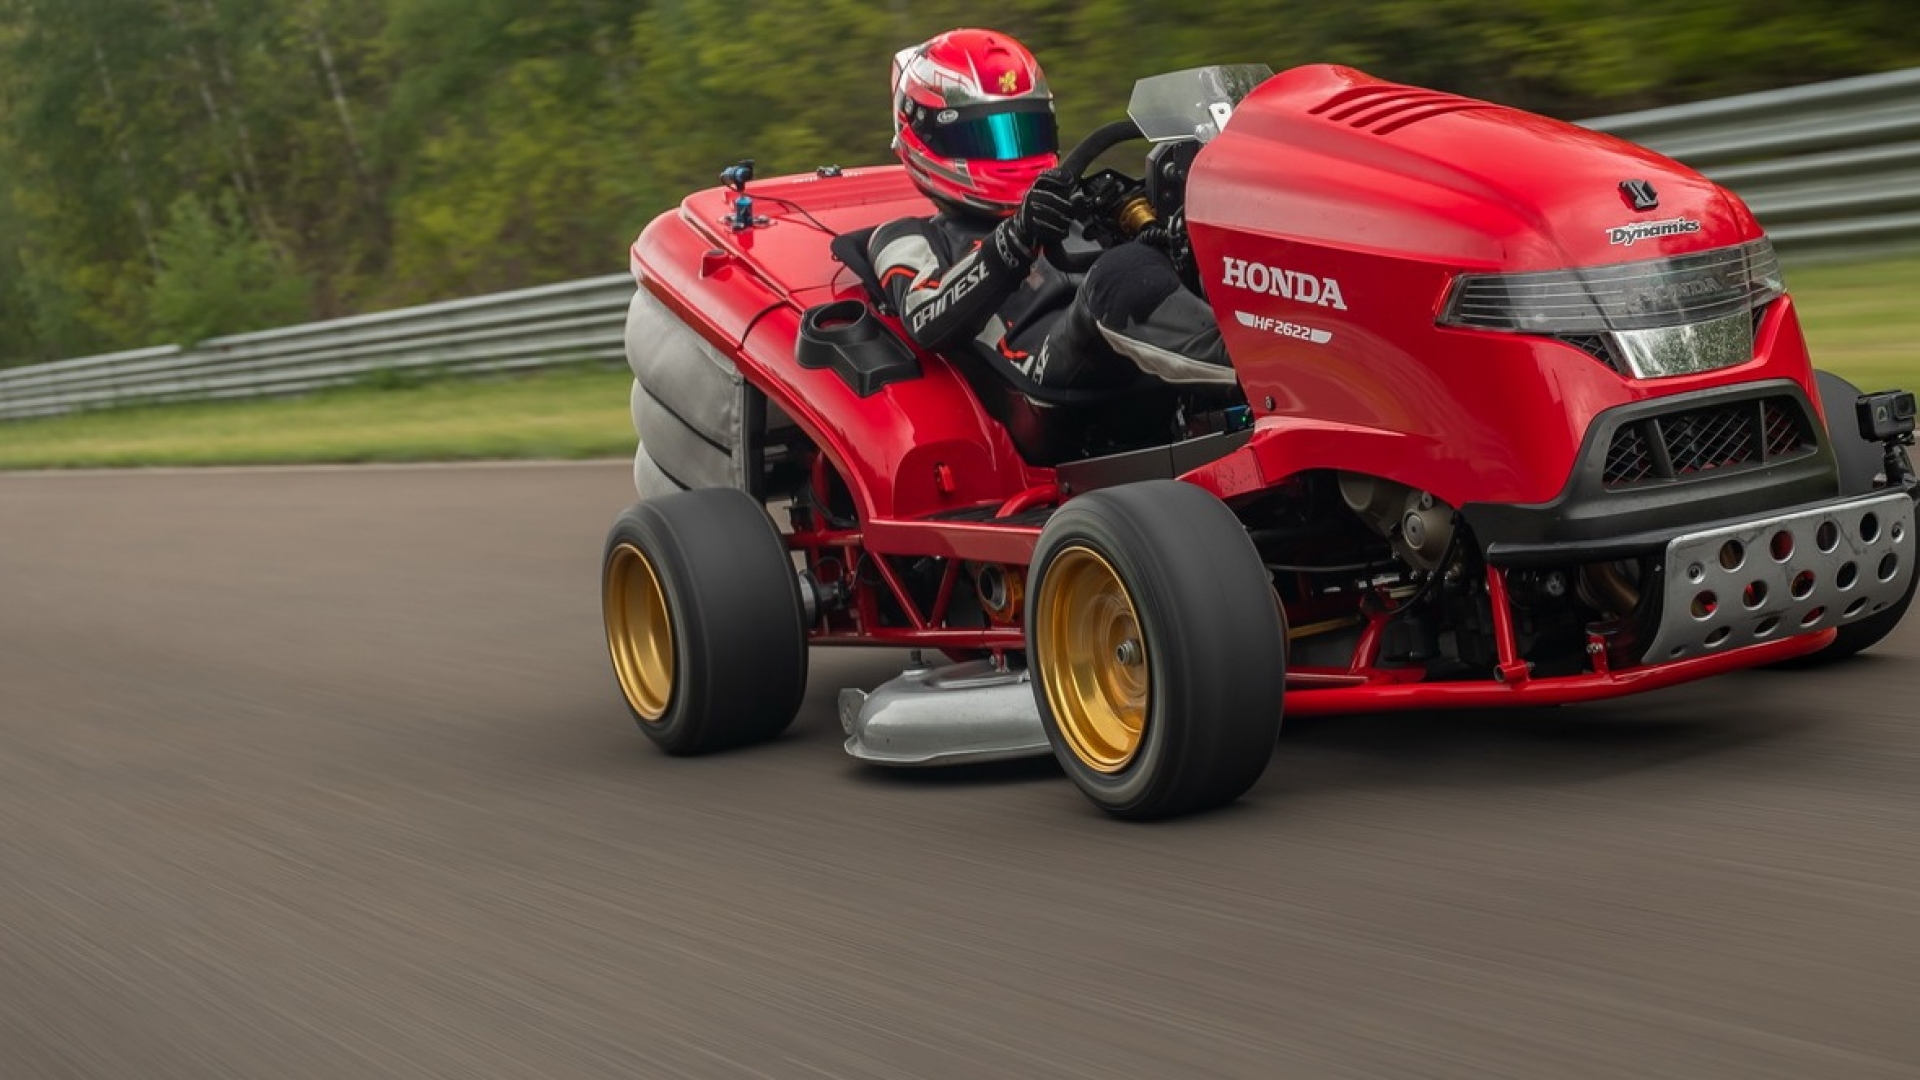 Газонокосилка Honda Mean Mower V2 ставит рекорды скорости